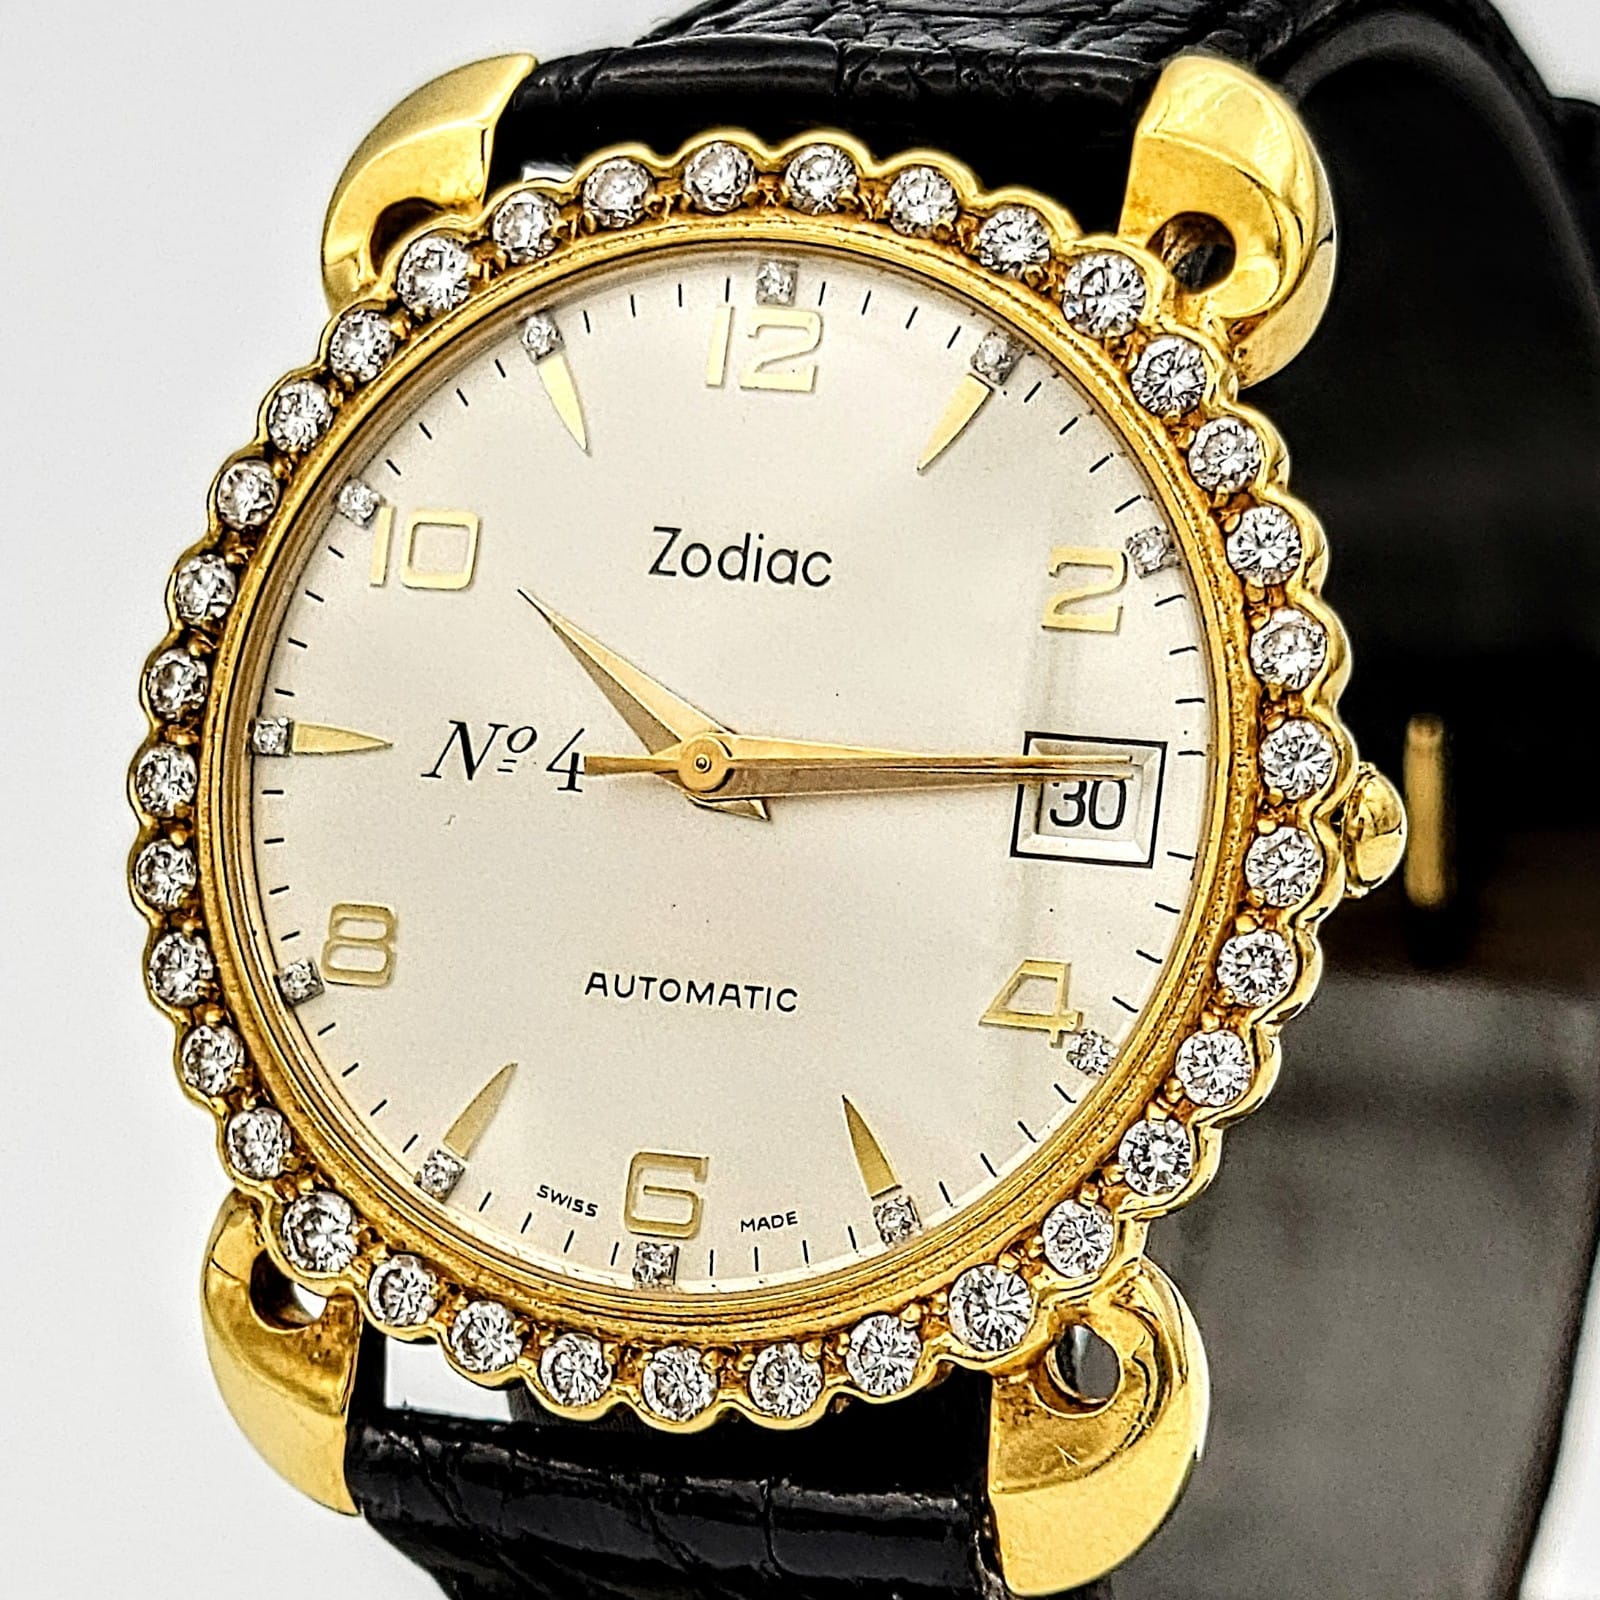 110th ZODIAC Anniversary Automatic Watch 18K Gold Diamond Bezel Limited Edition!